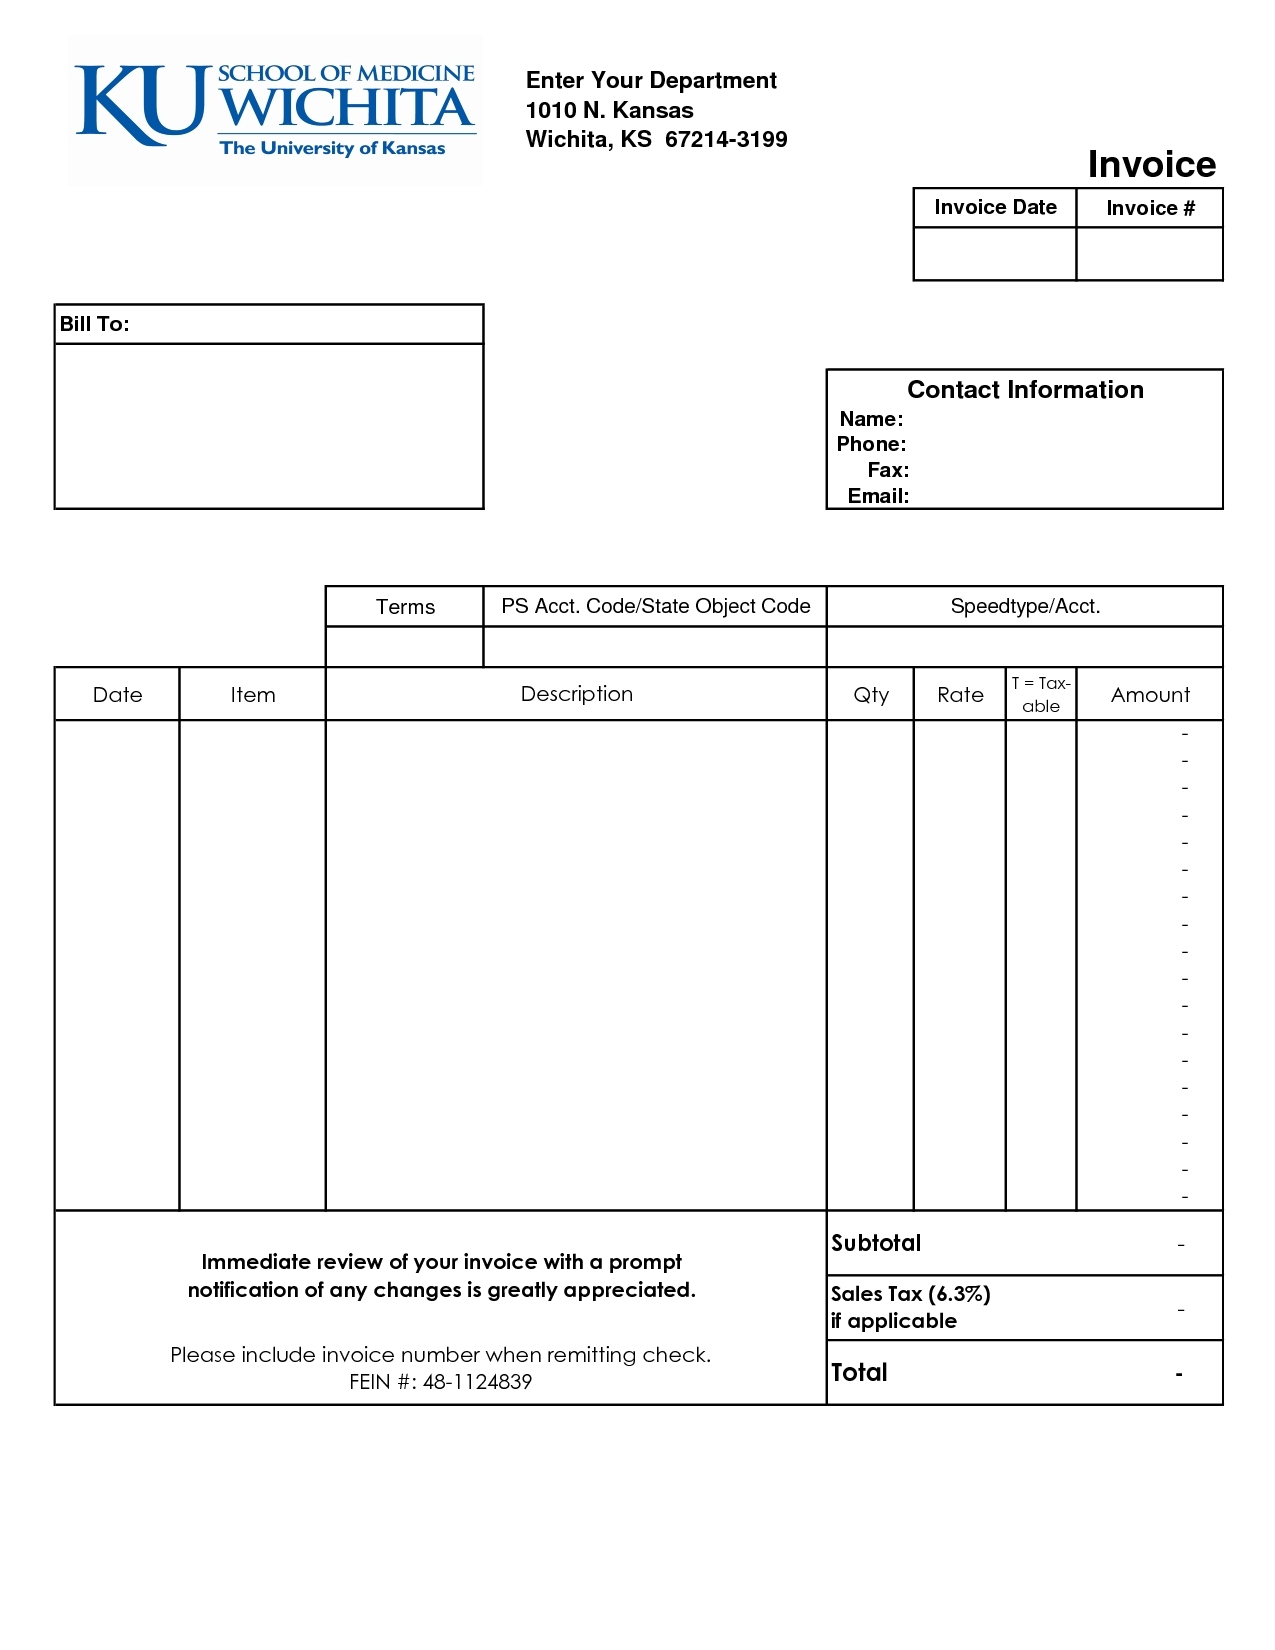 billing-invoice-sample-bill-format-template-templat-latest-intended-for-billing-invoice-sample